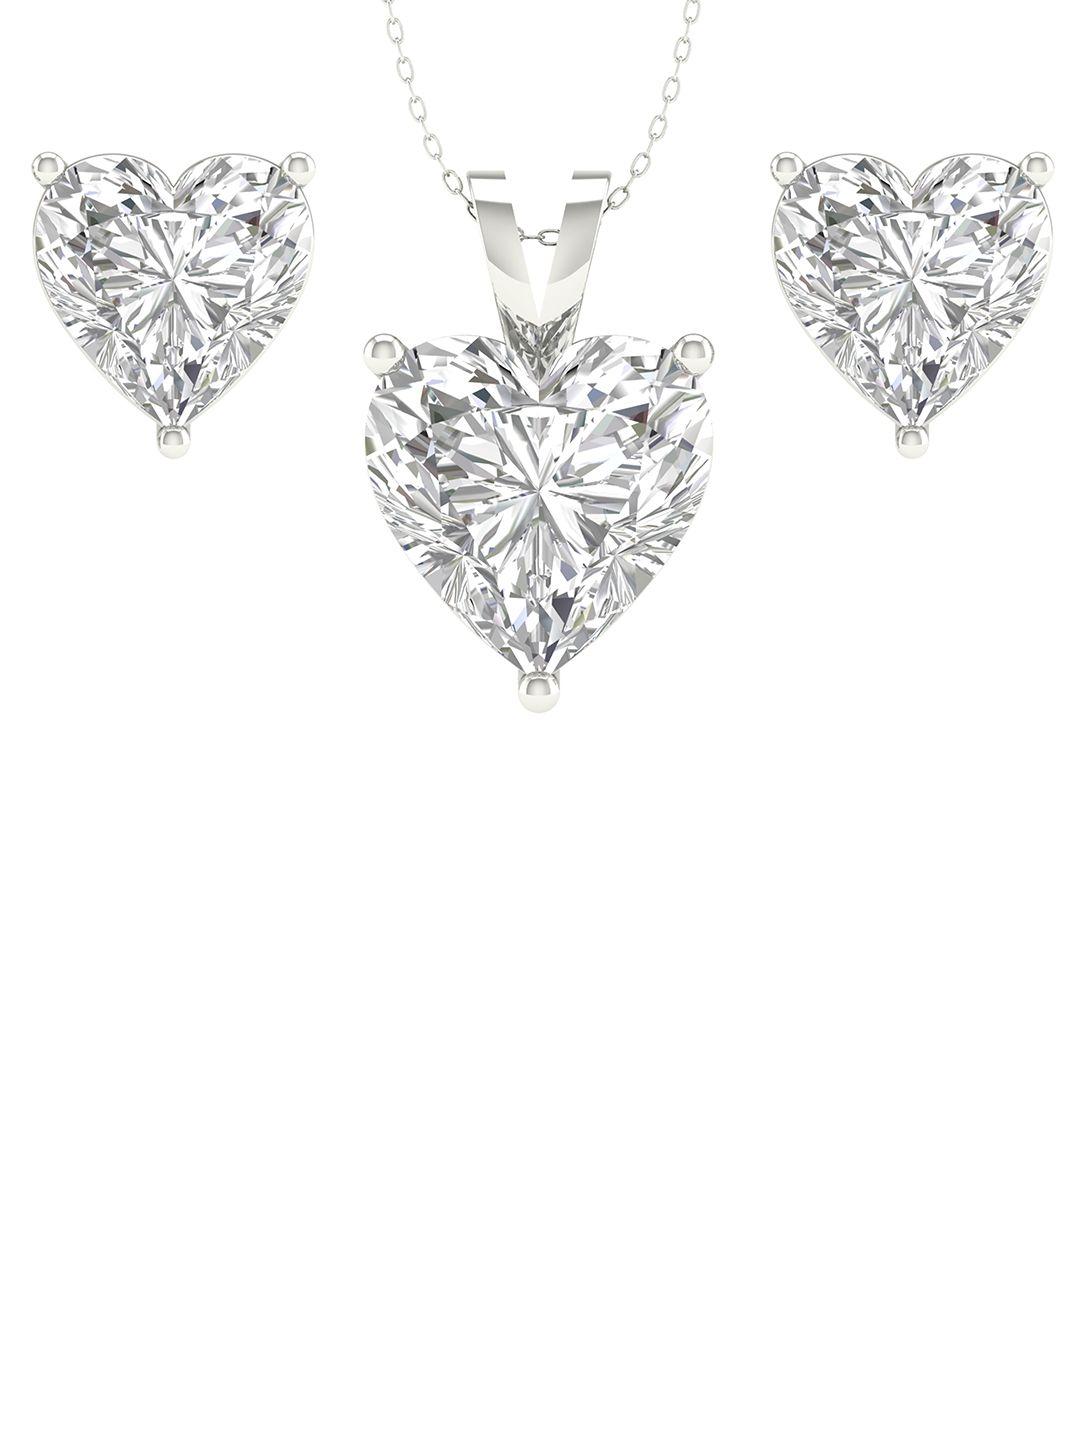 orionz silver-plated cz studded jewellery set